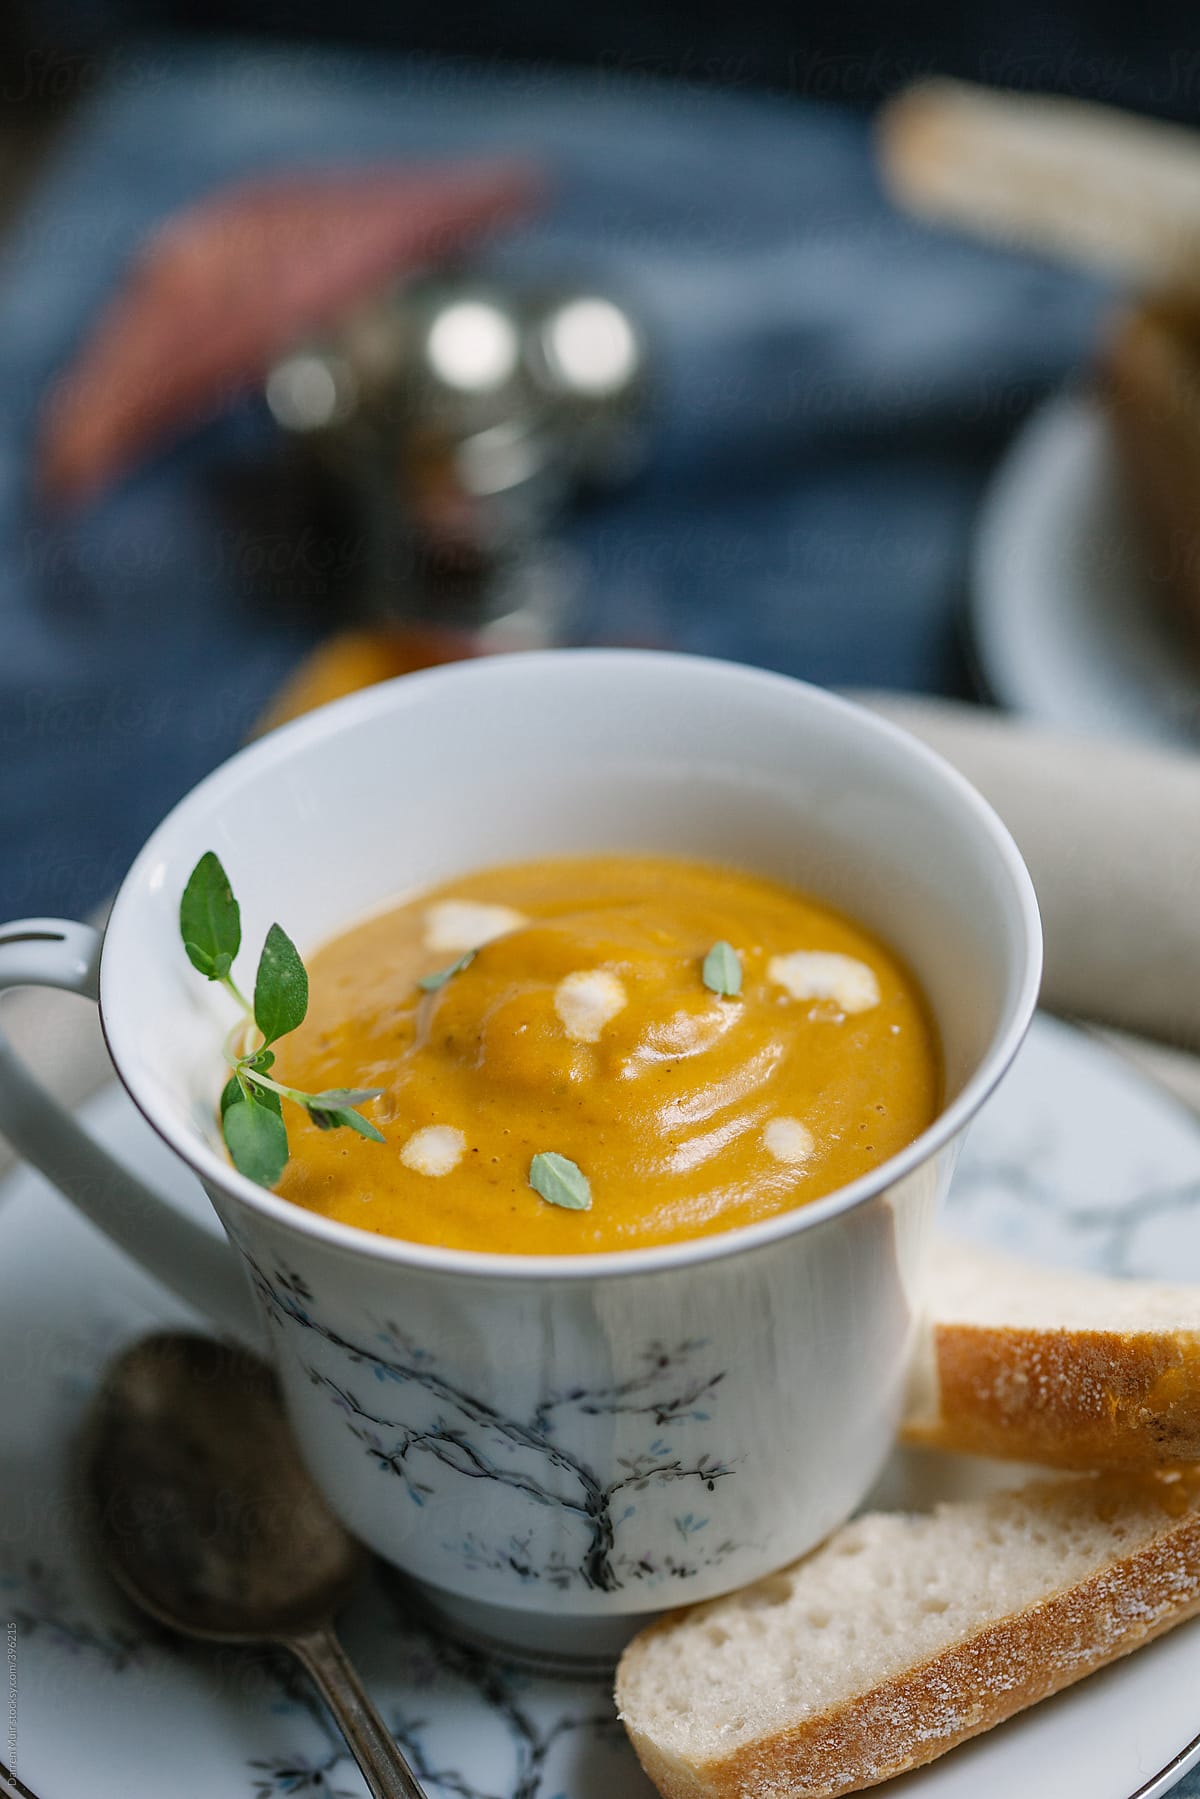 Teacup of pumpkin soup.